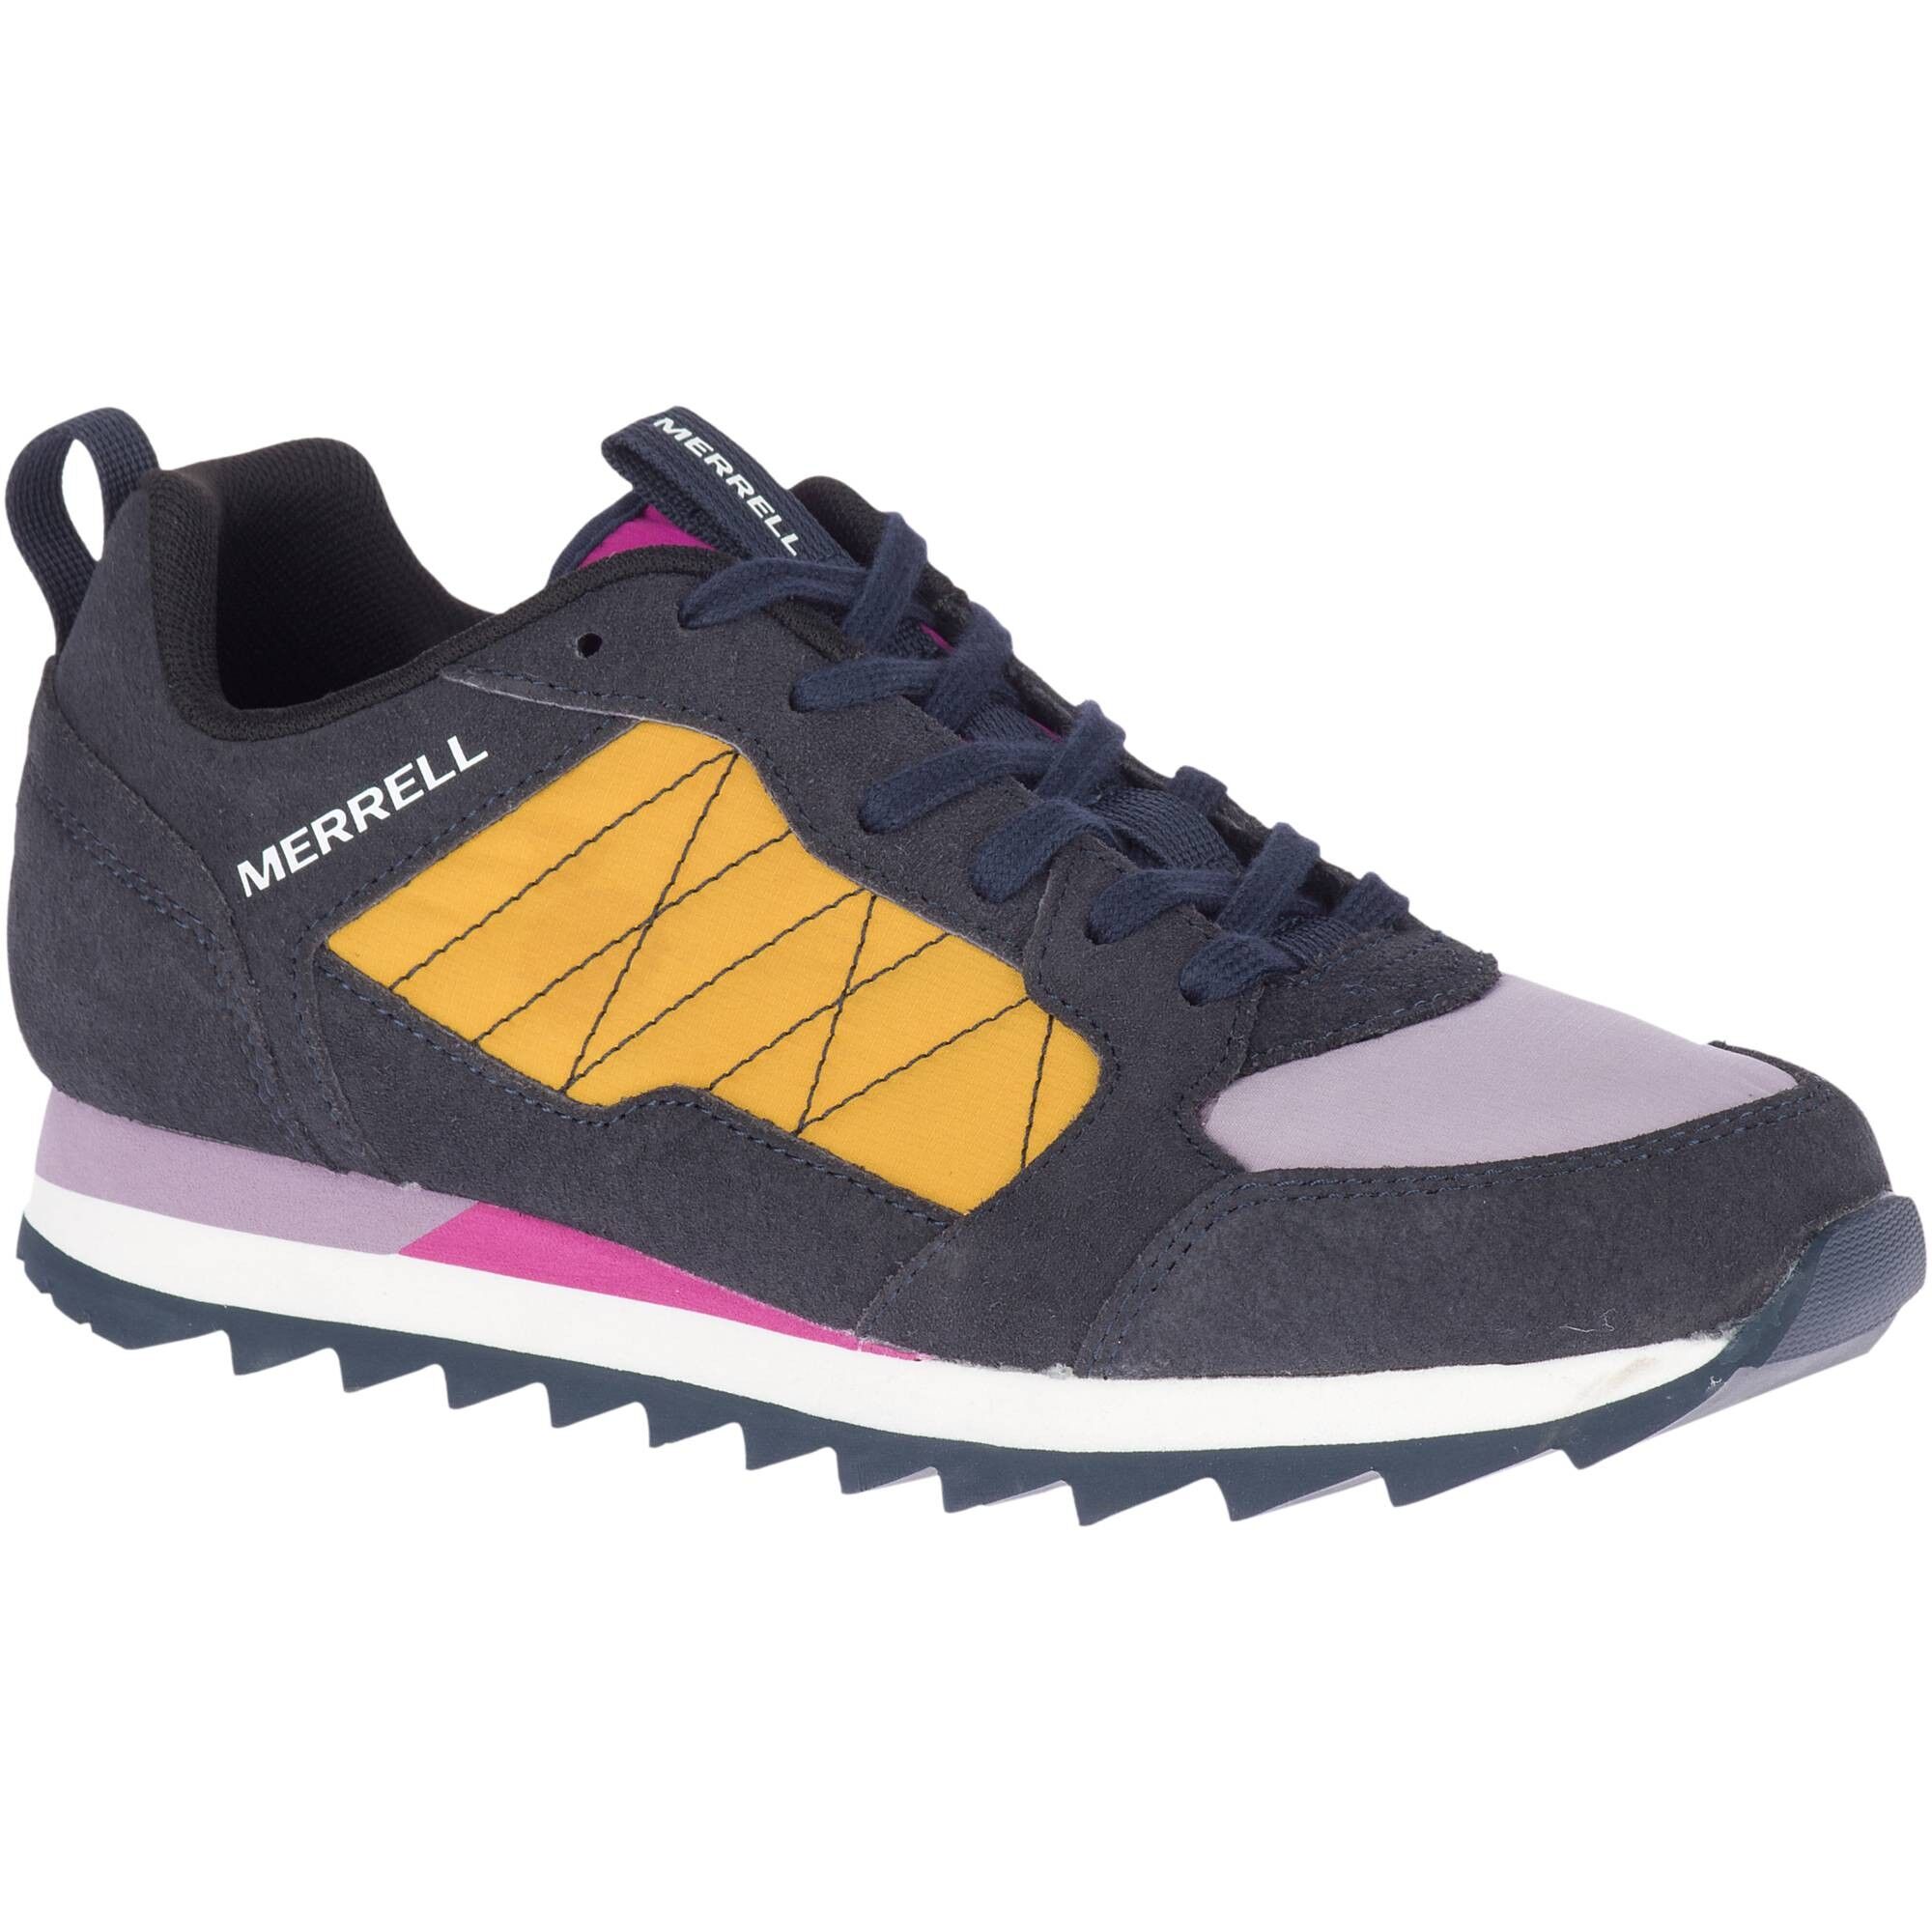 Merrell Alpine Sneaker - Shoes - Women's